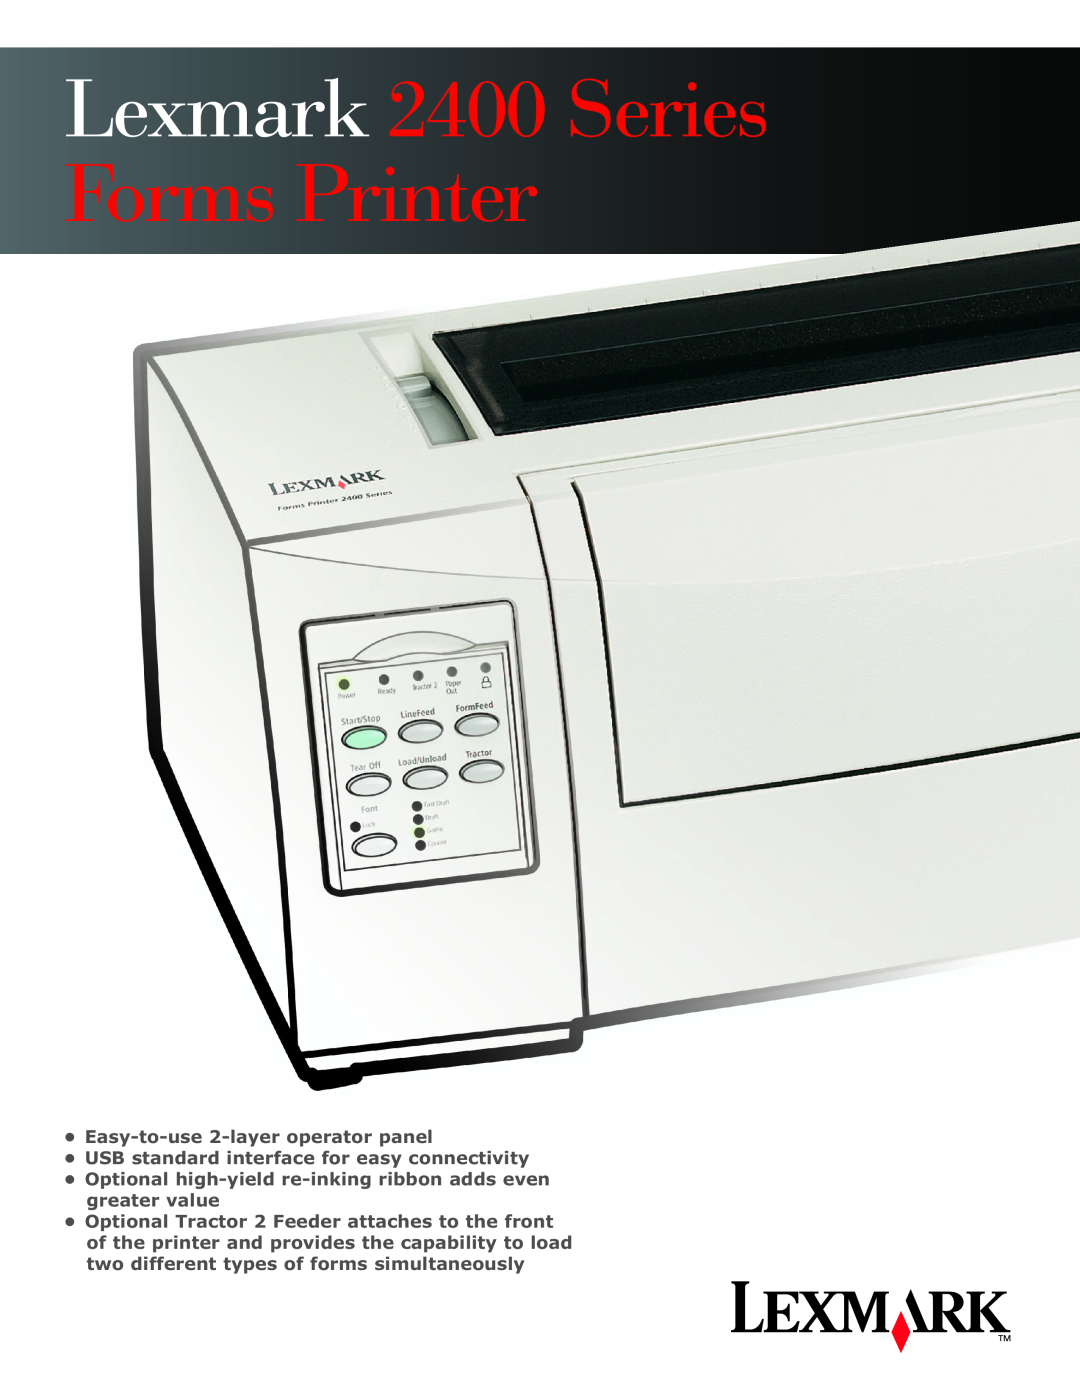 Lexmark manual Lexmark 2400 Series Forms Printer, Easy-to-use 2-layeroperator panel 